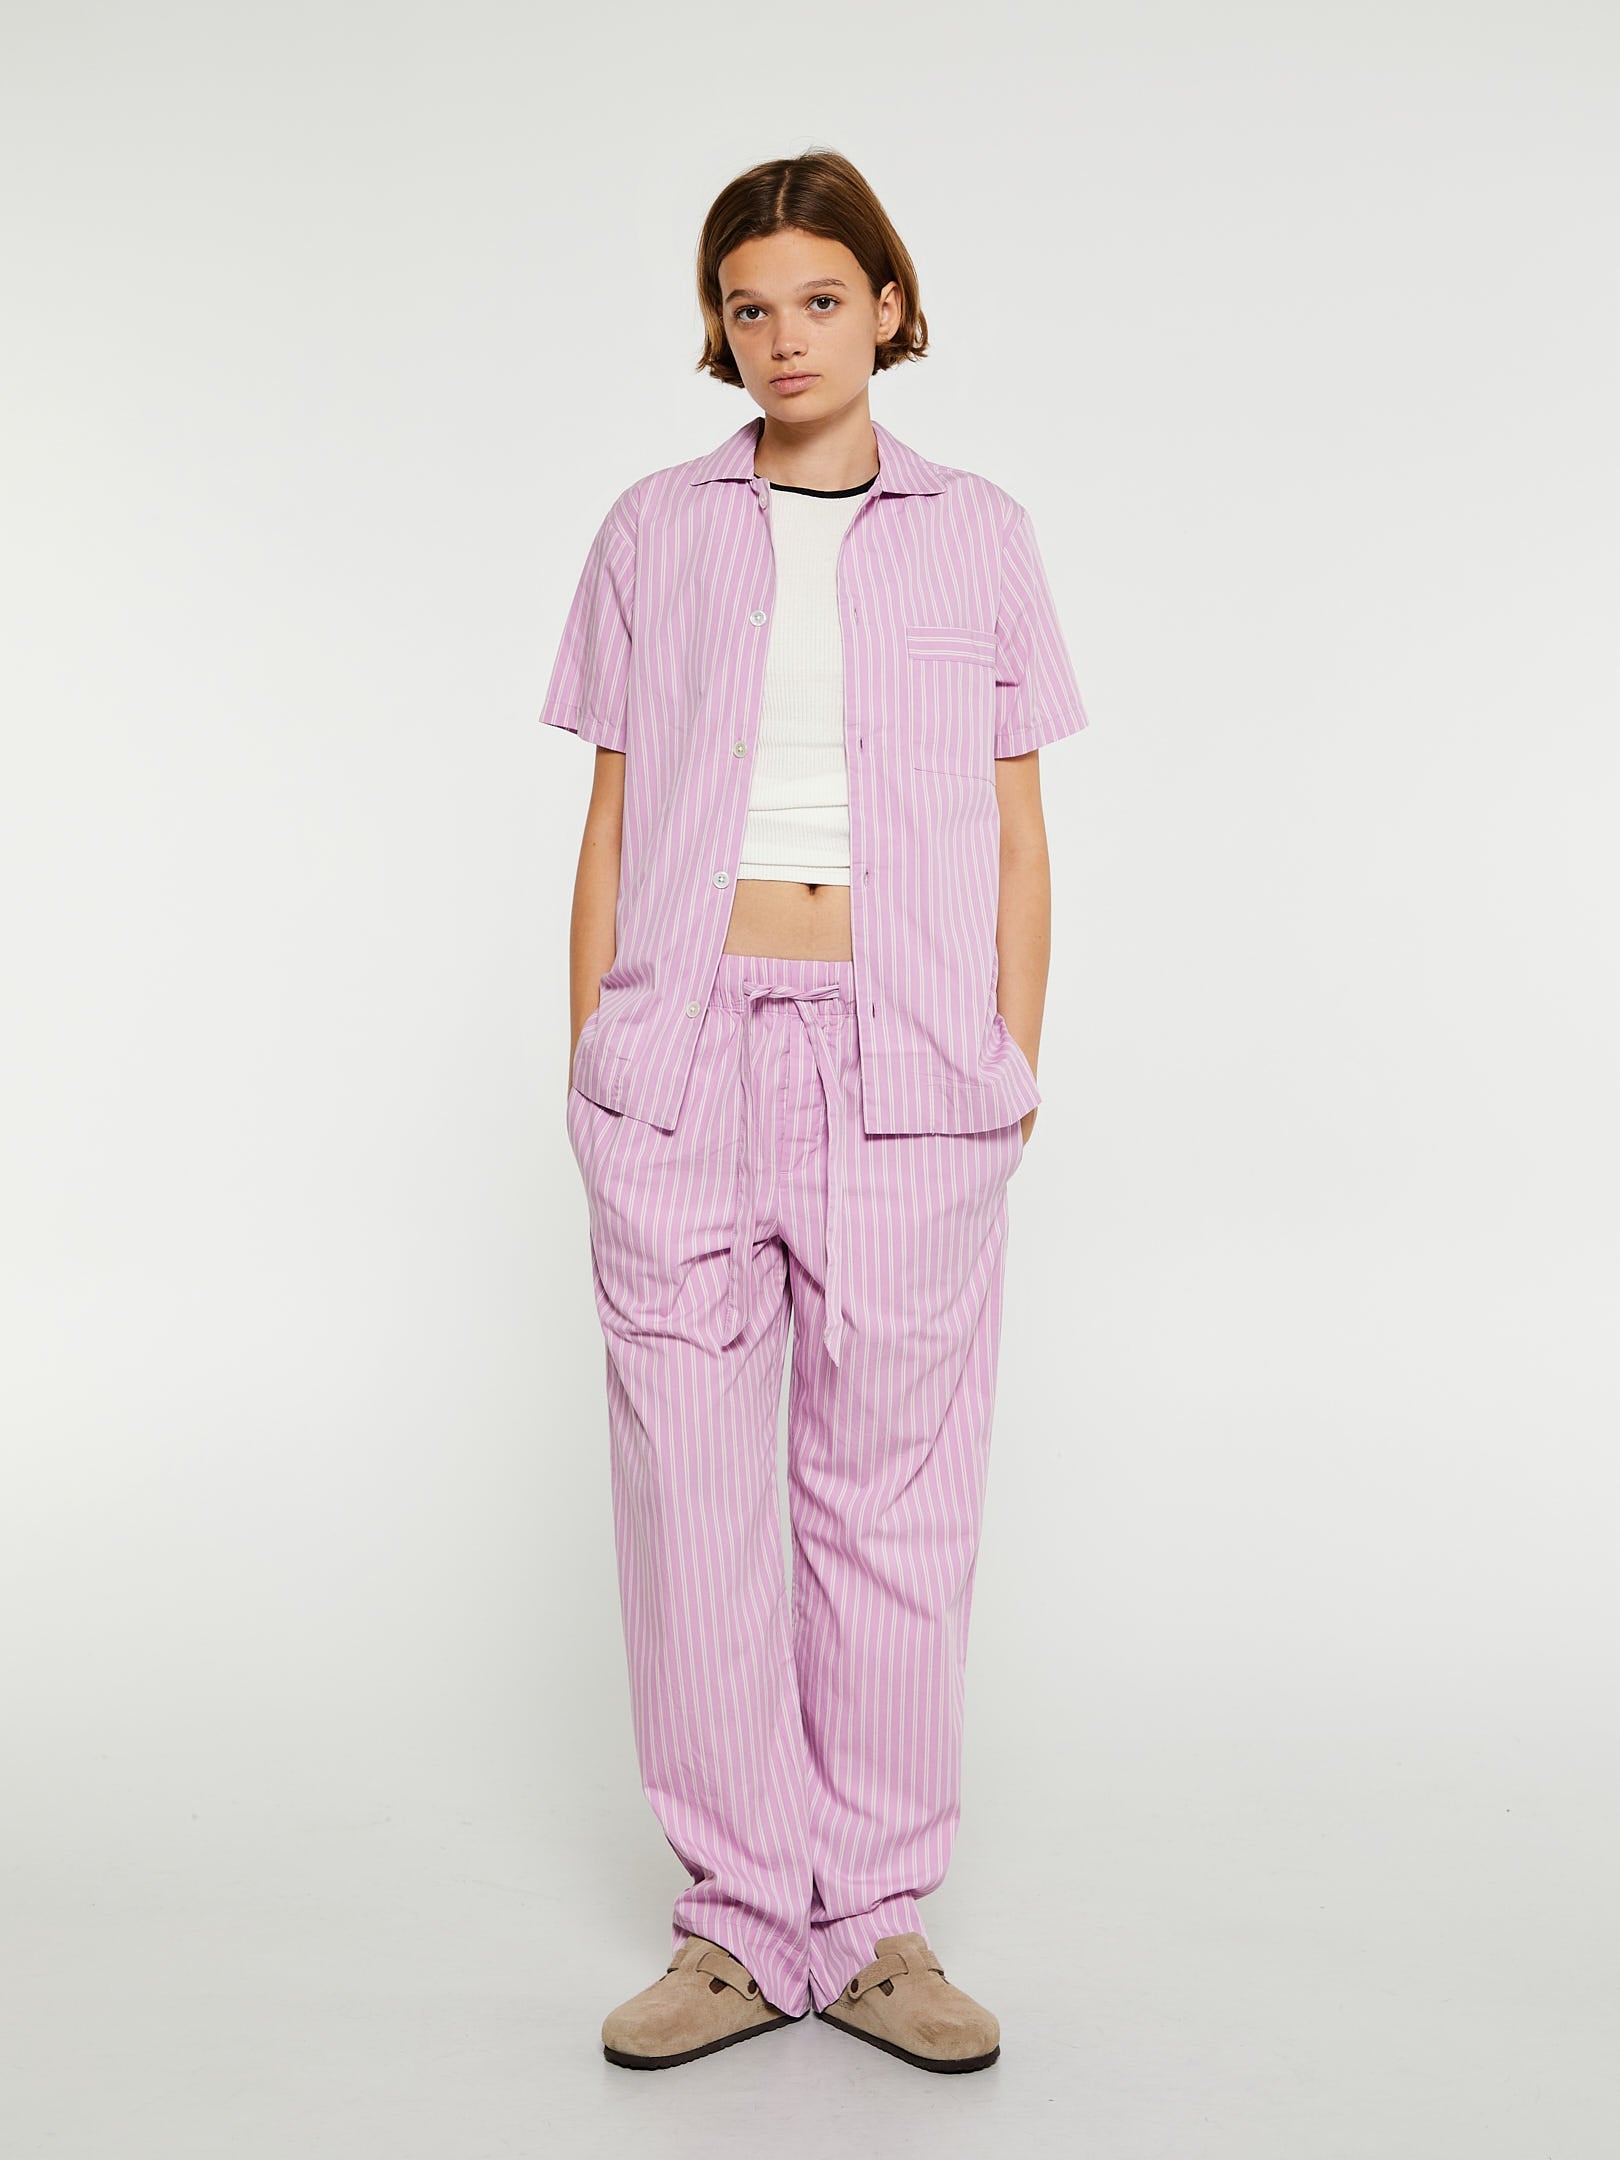 Poplin Pyjamas Short Sleeve Shirt in Purple Pink Stripes